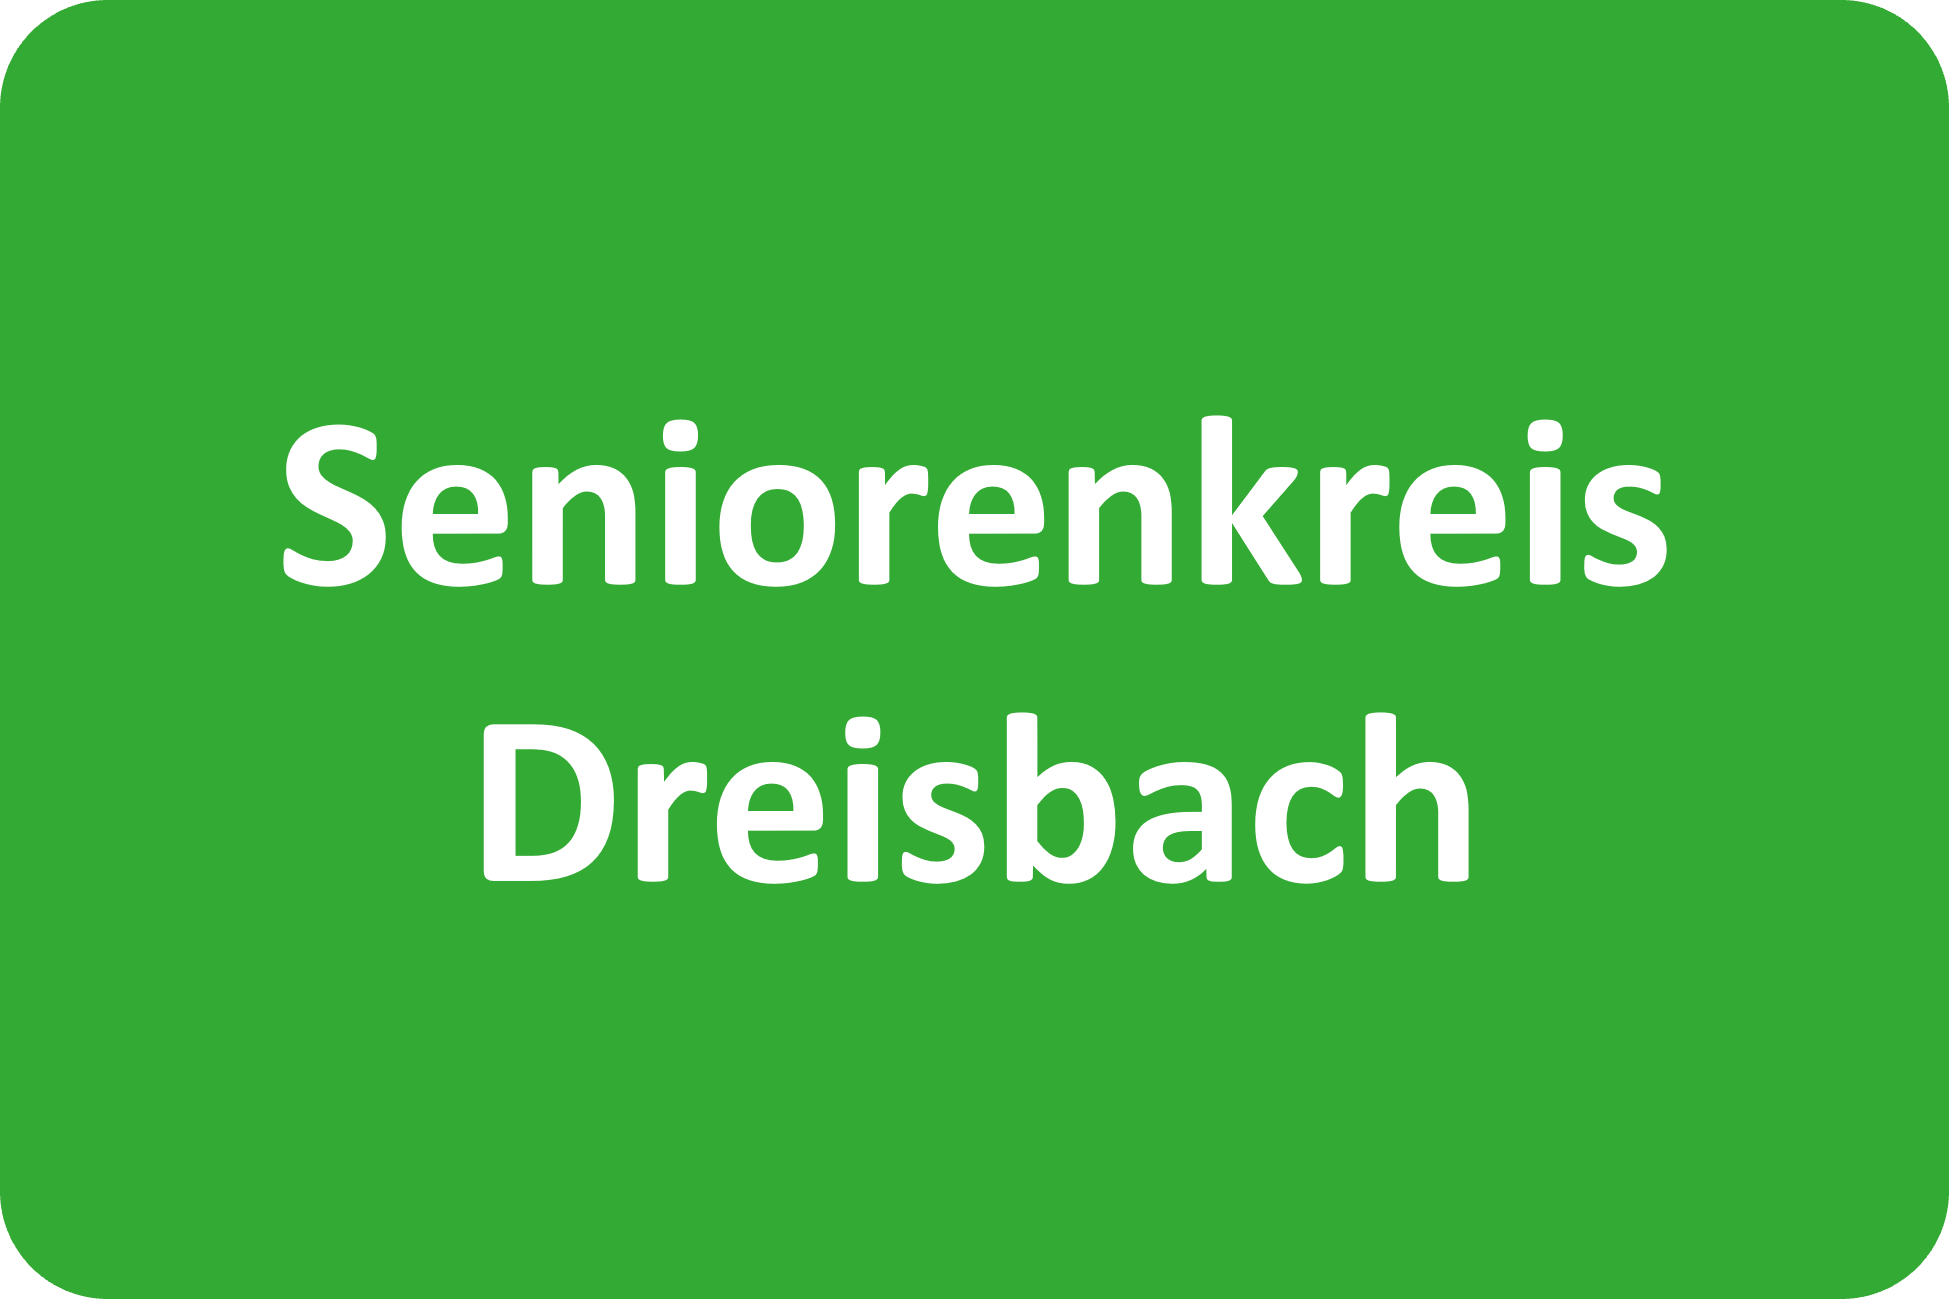 Seniorenkreis Dreisbach